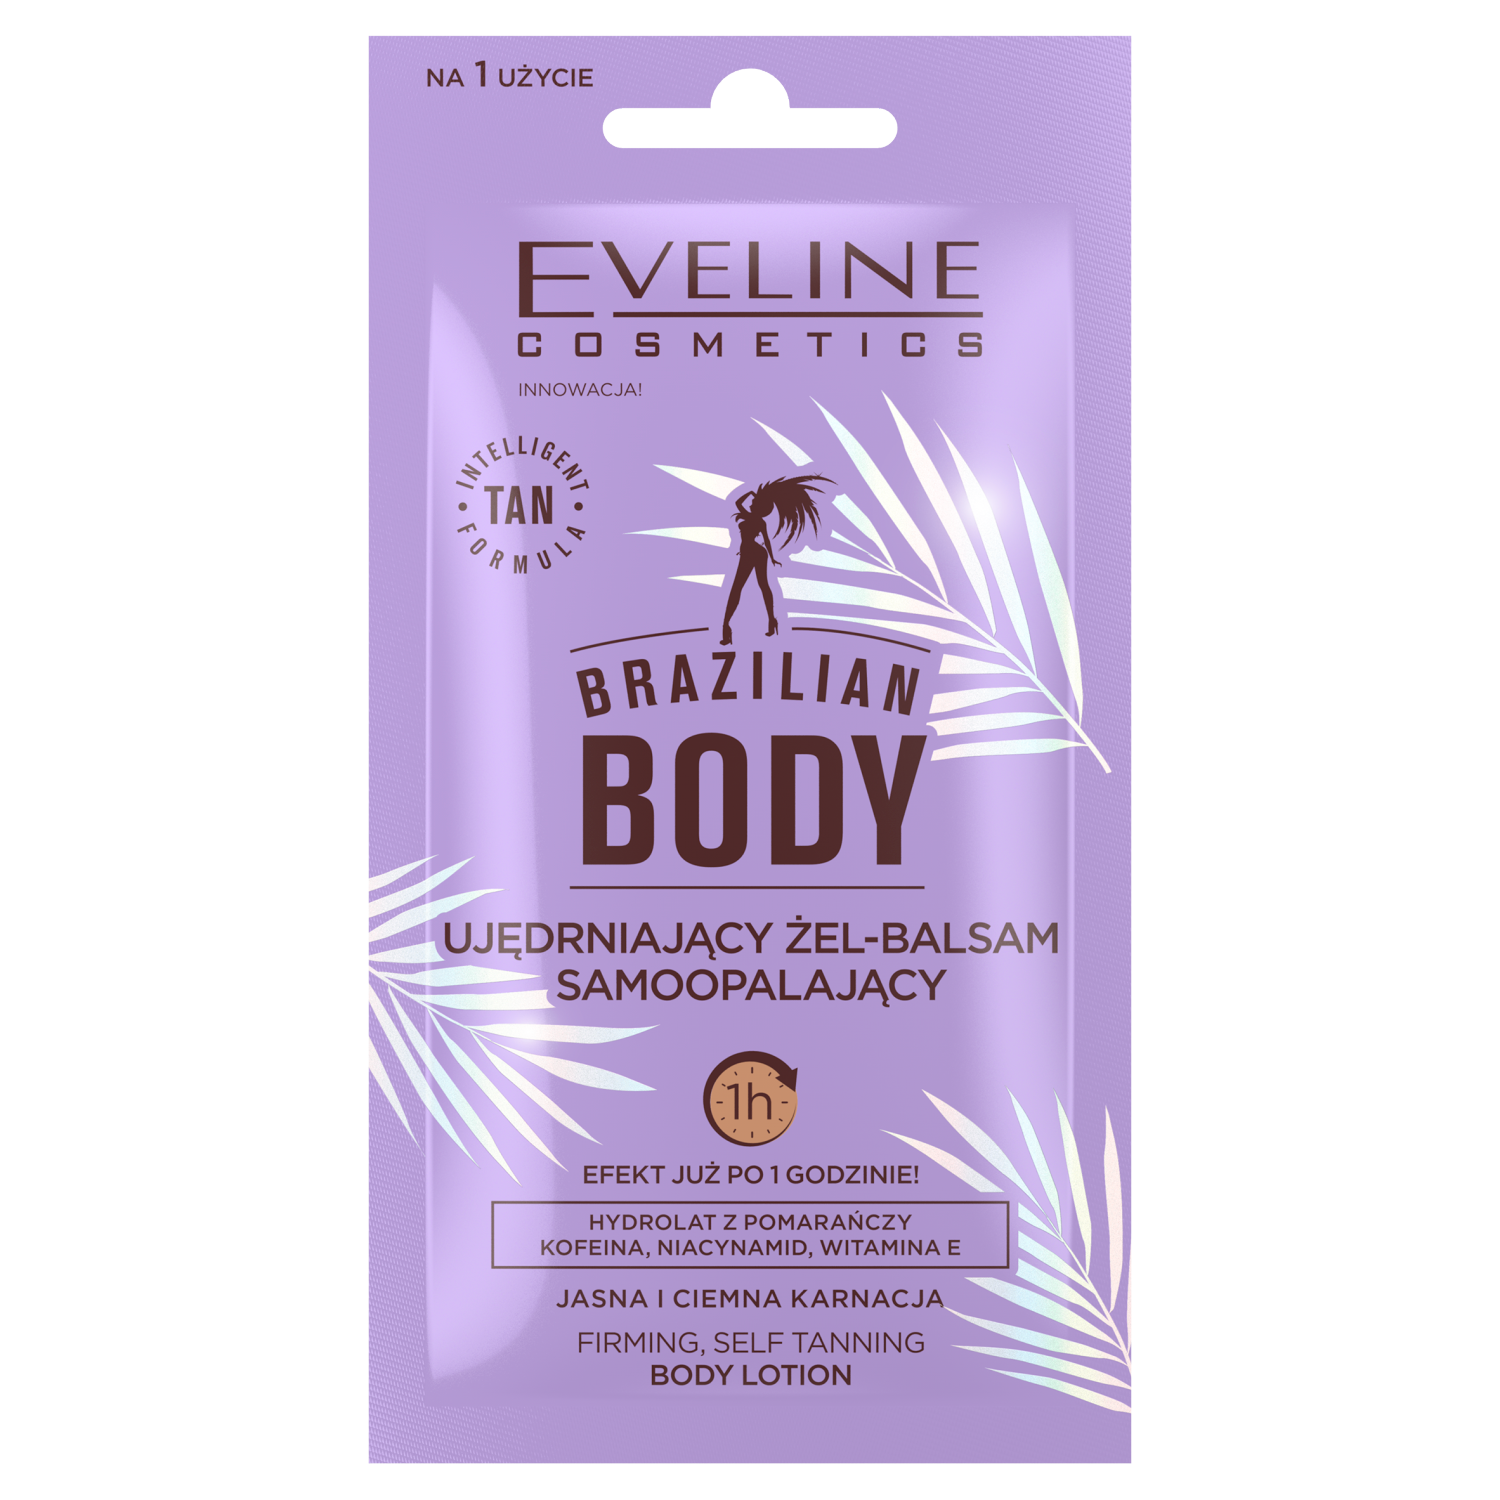 Eveline Cosmetics Brazilian Body бронзирующий лосьон для тела, 12 мл увлажняющий лосьон автозагар для тела eveline brazilian body для светлой кожи 5в1 200 мл